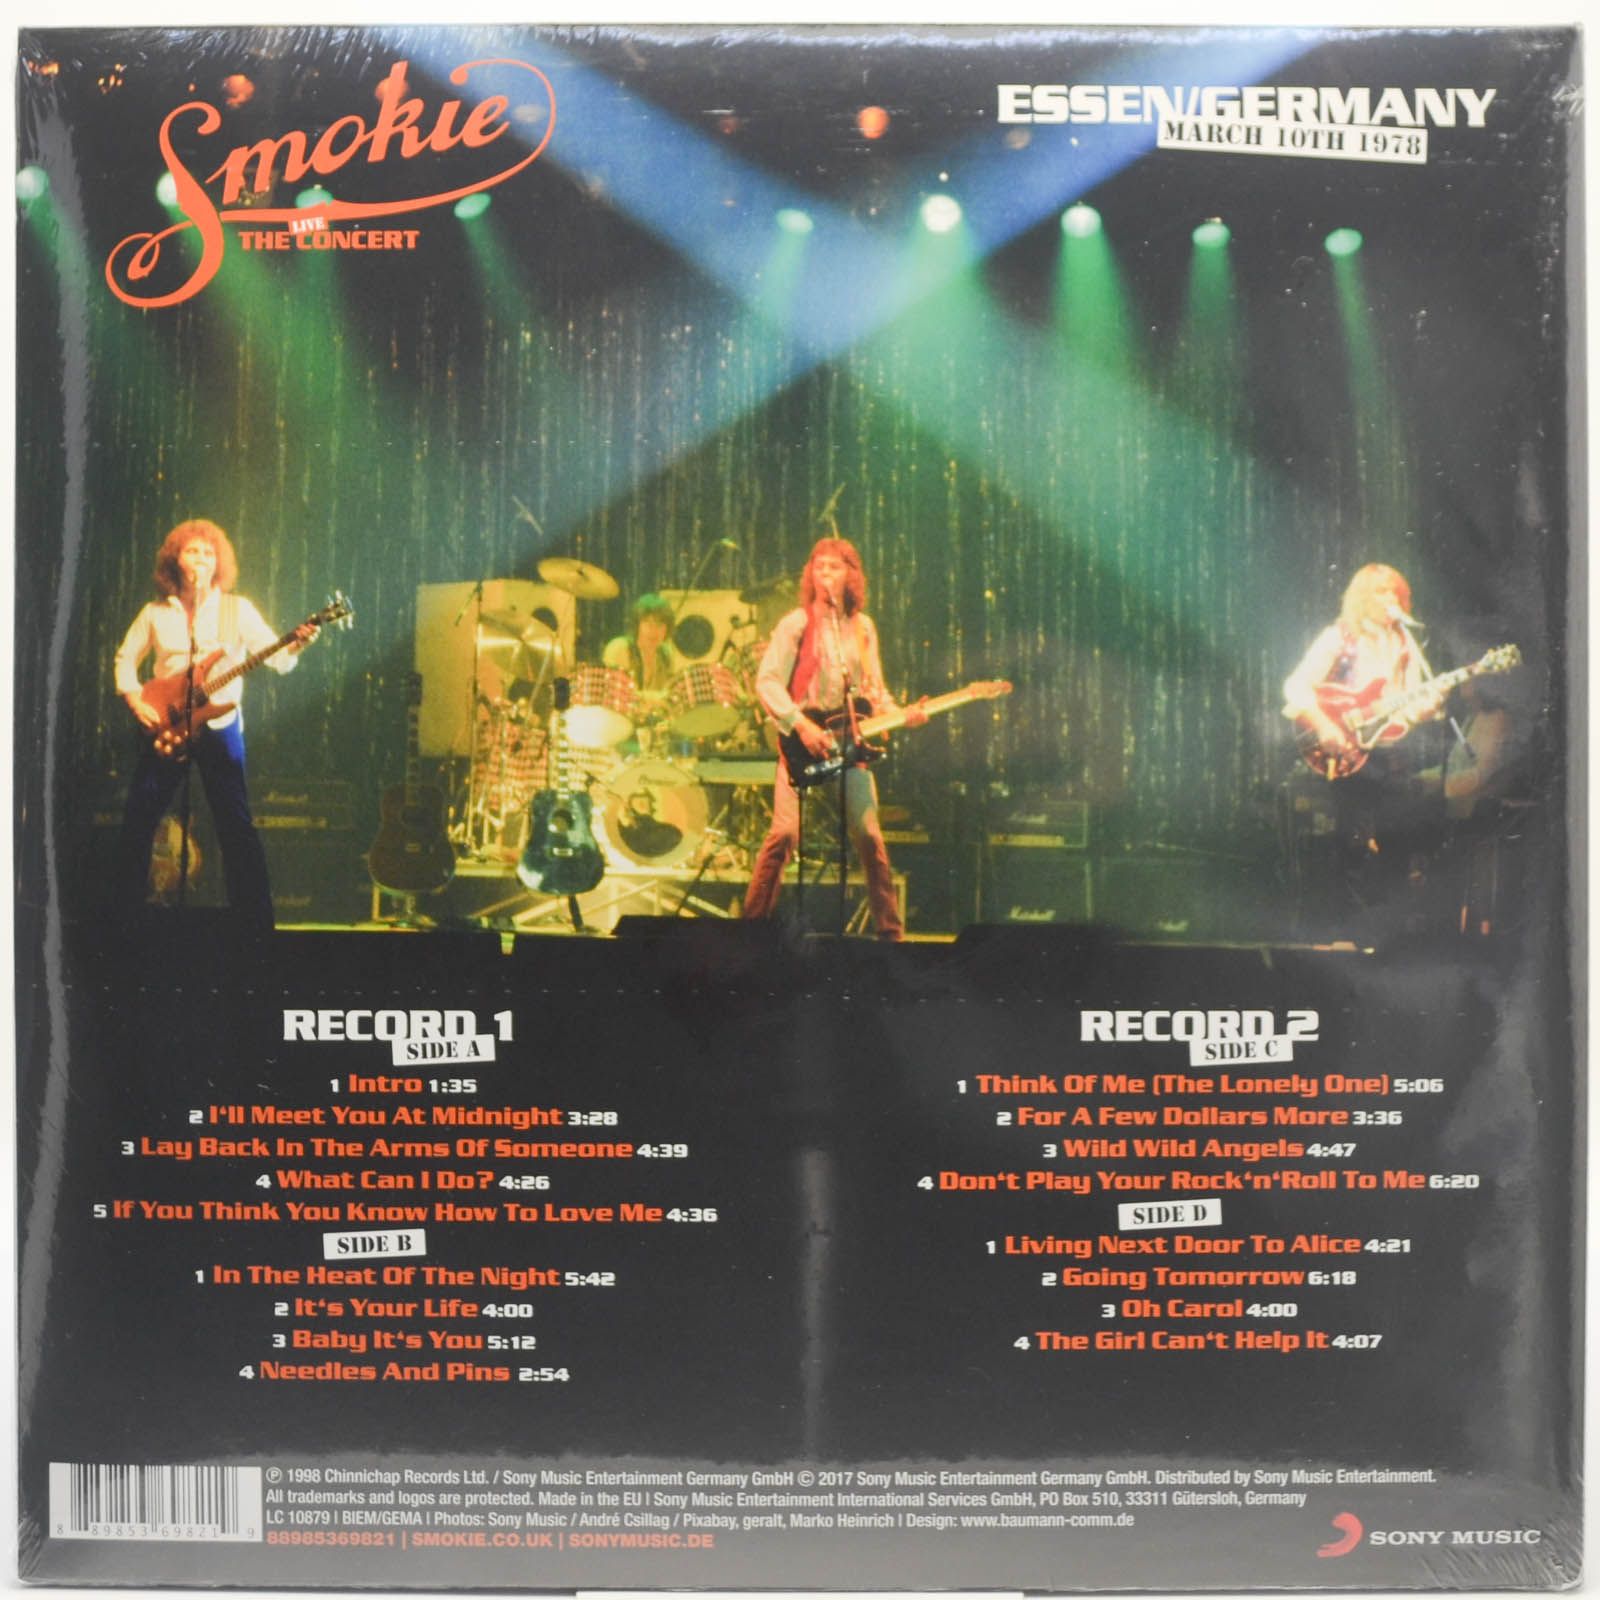 Smokie — The Live Concert (2LP), 1998